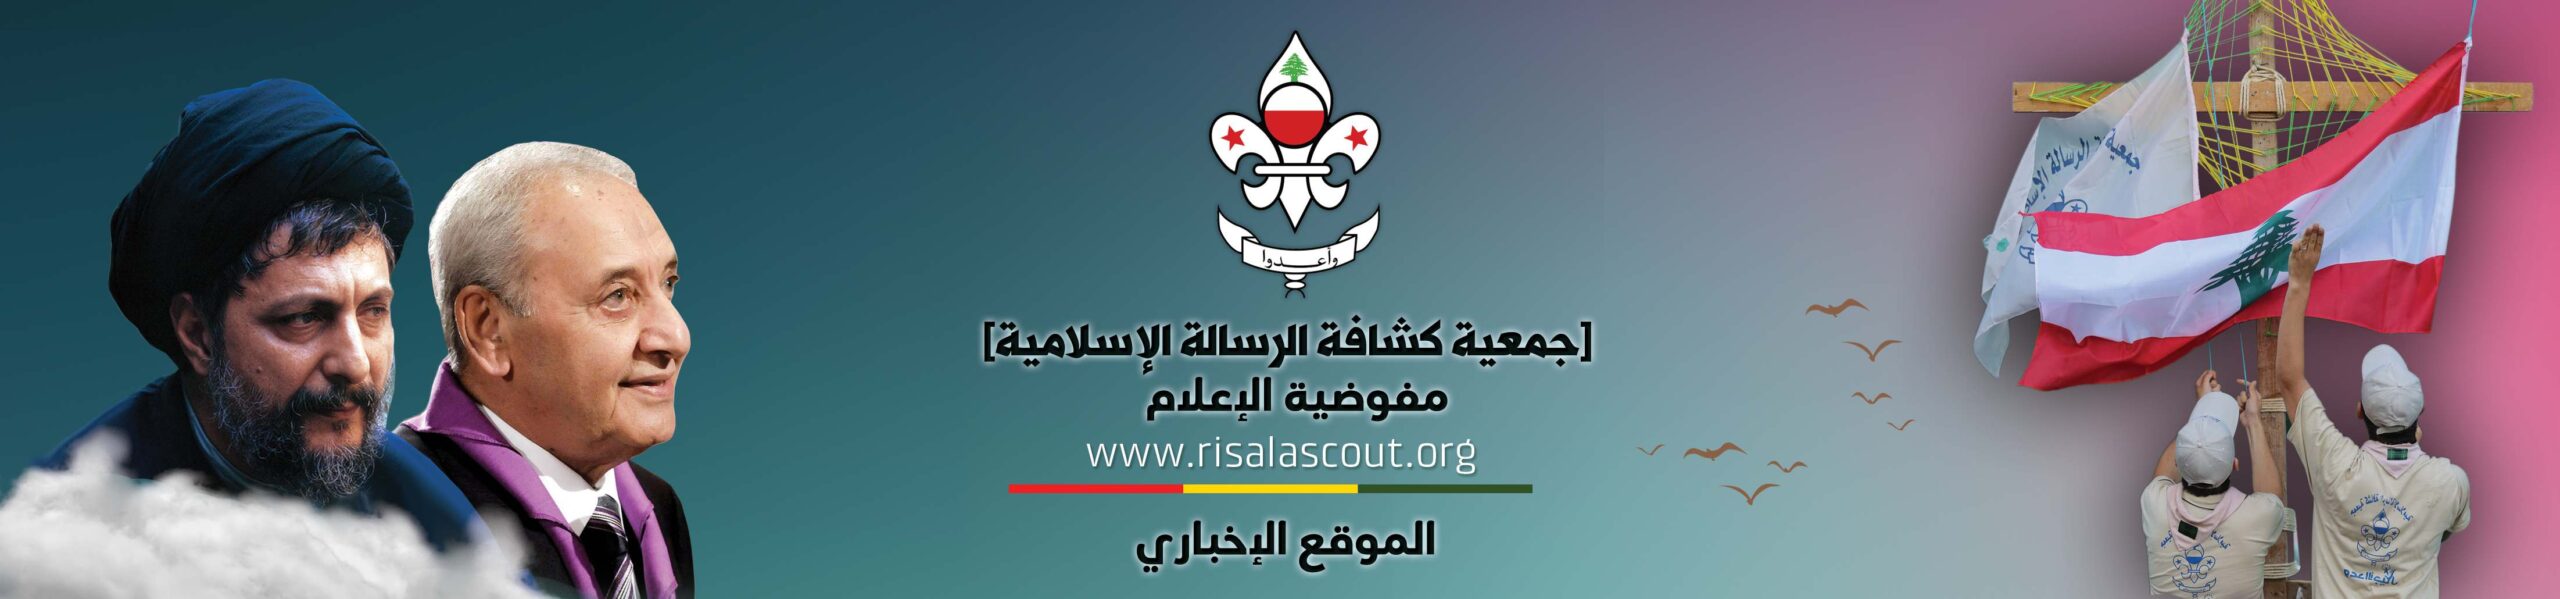 Risala Scout News|الموقع الإخباري لكشافة الرسالة الإسلامية